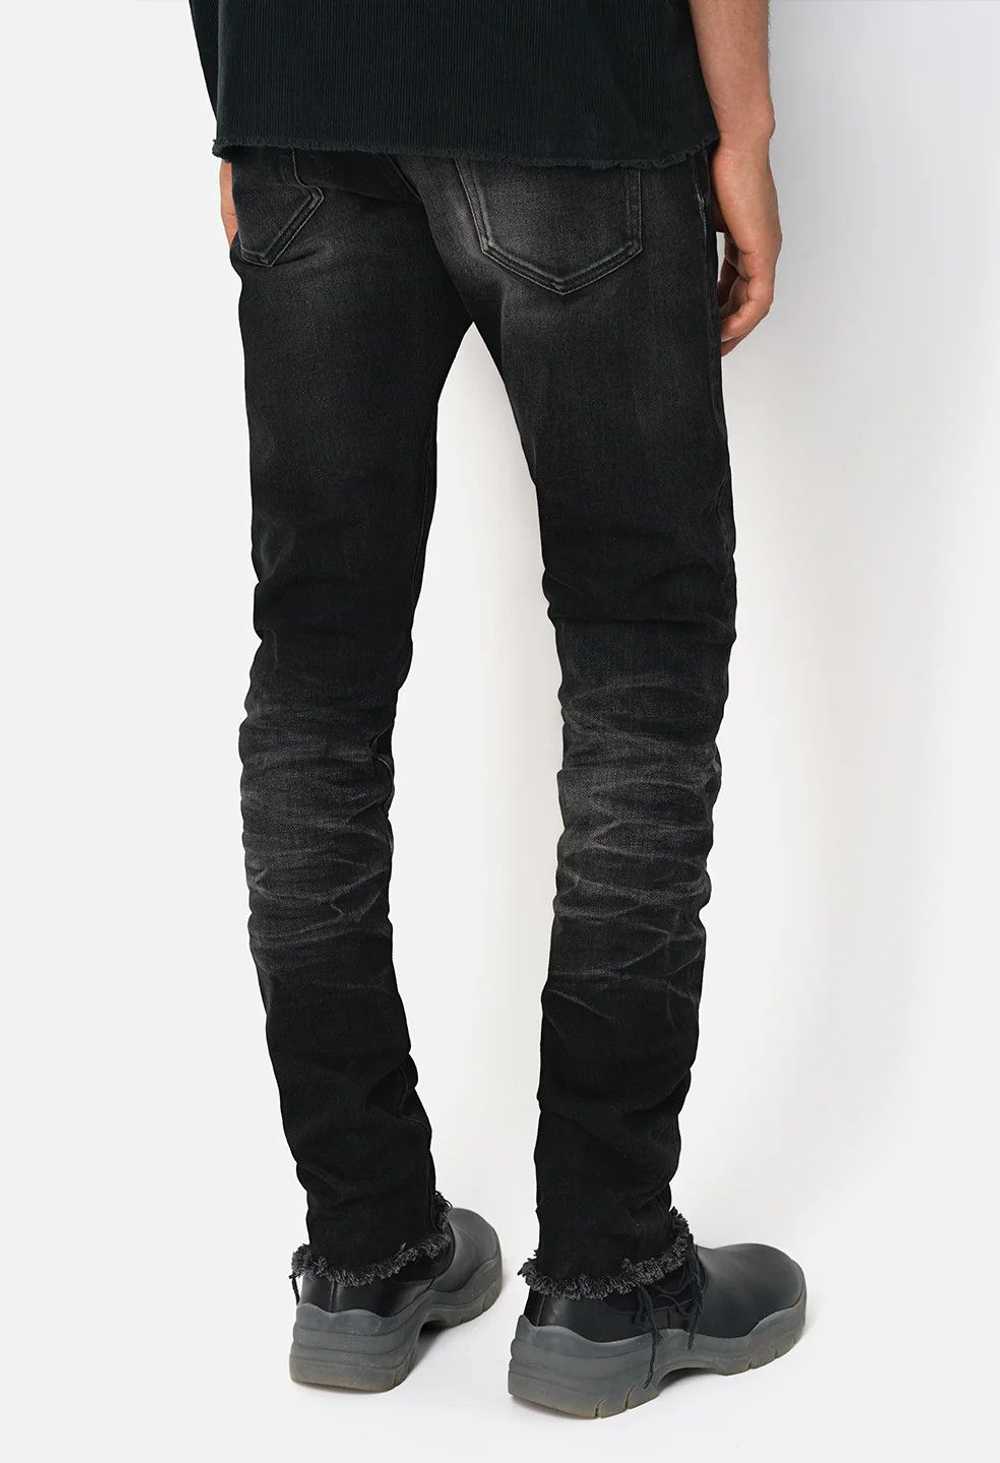 John Elliott Jeans, new with tags - image 8